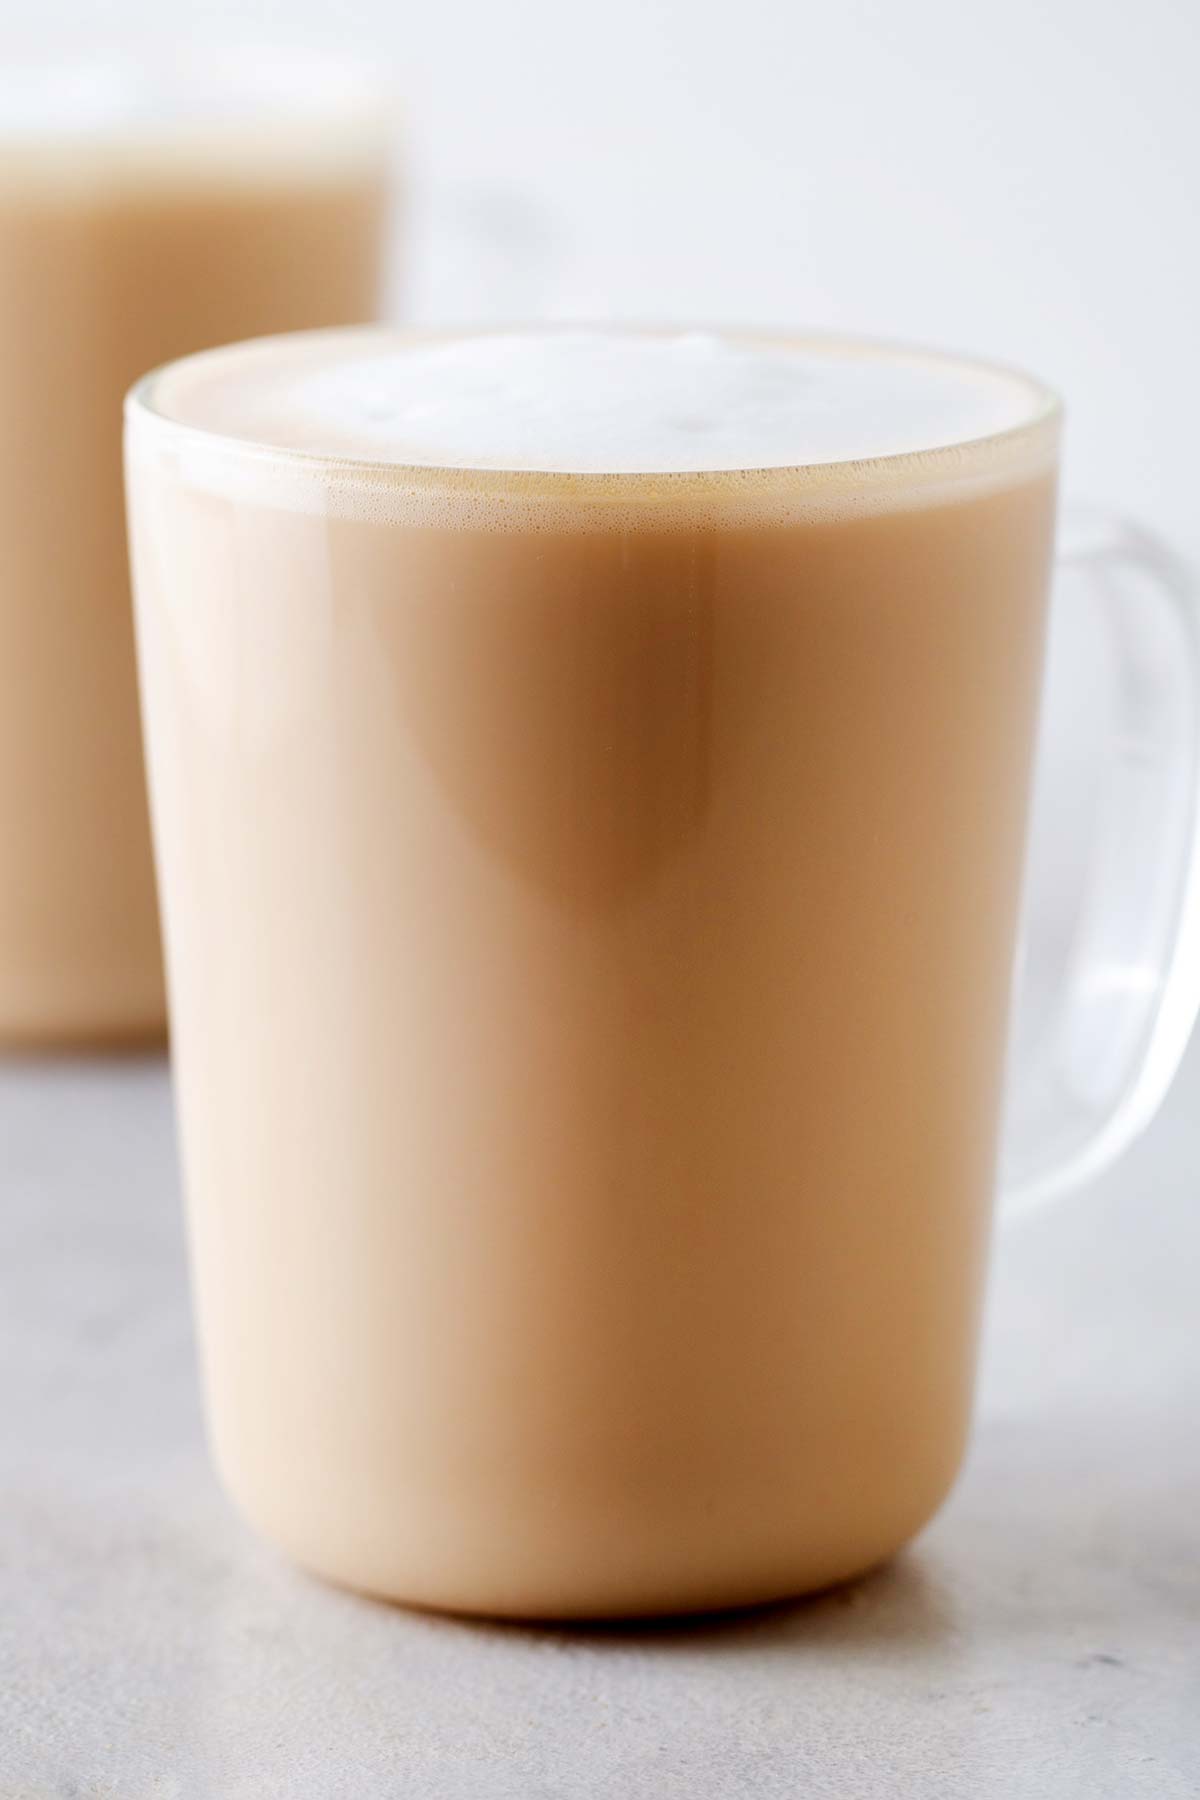 Starbucks Blonde Vanilla Latte copycat drink in a clear, glass mug.